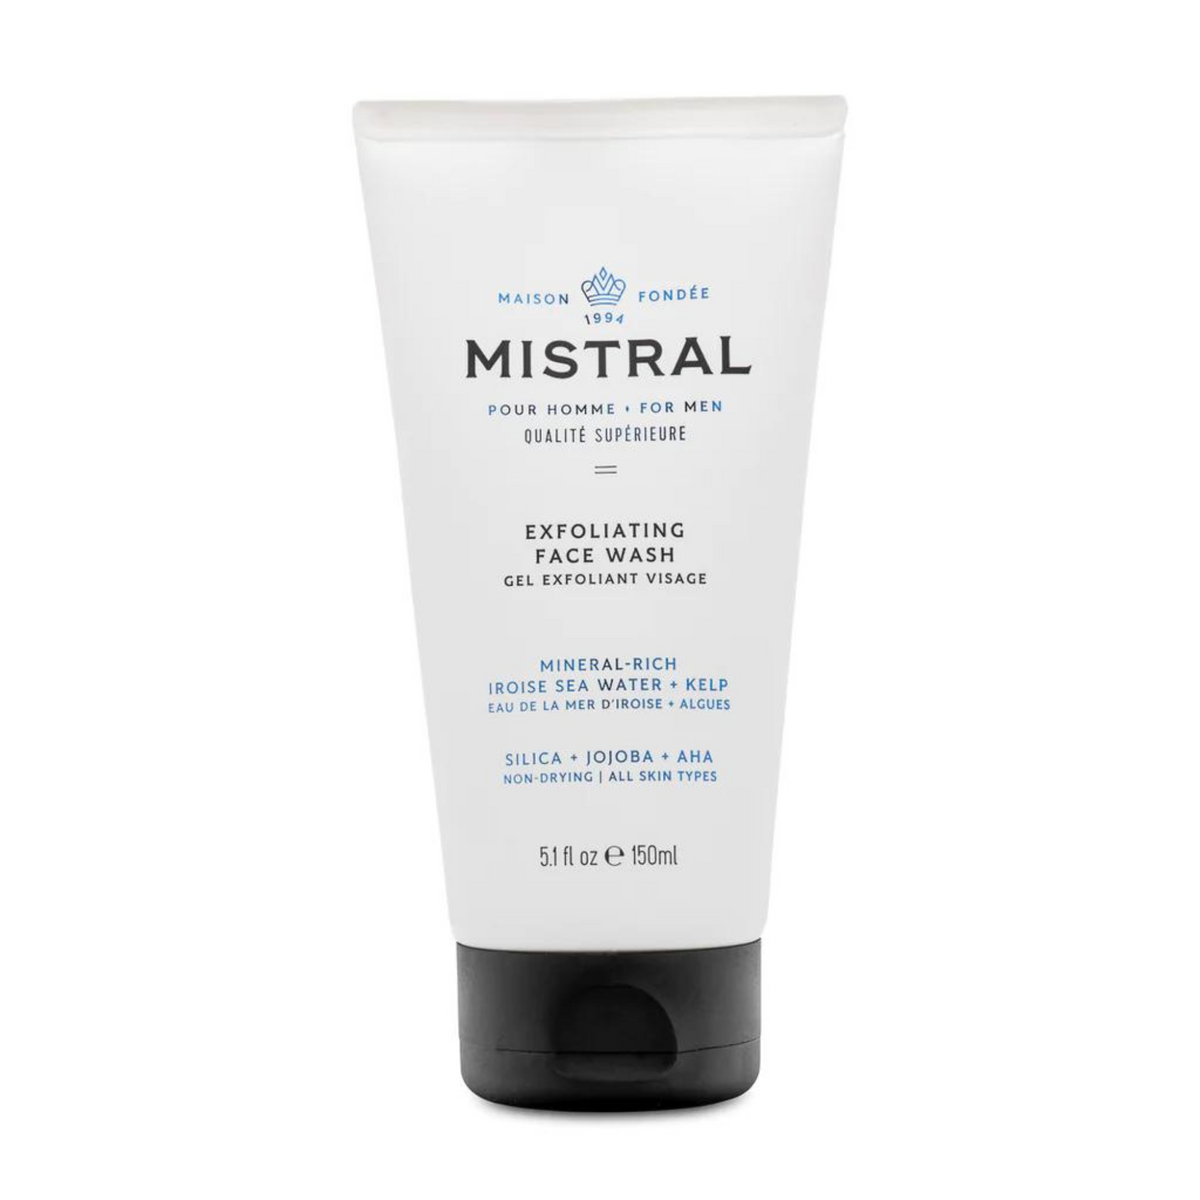 Primary Image of Mistral Exfoliating Face Wash (5.1 fl oz)